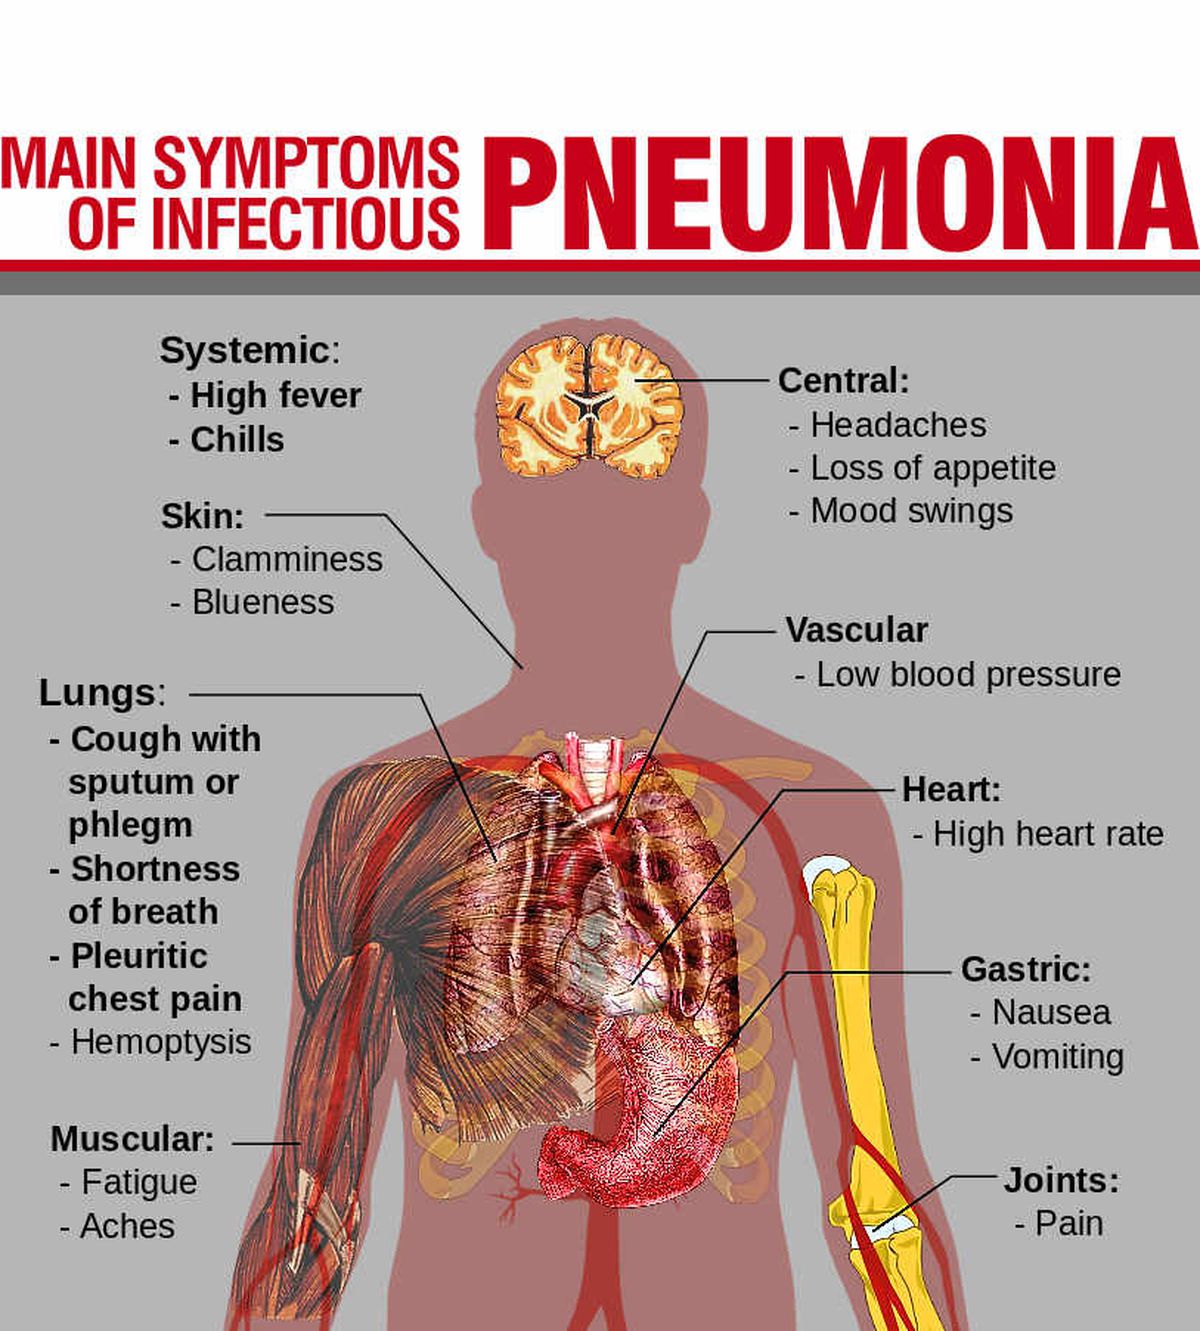 Pneumonia: The disease that kills 80 every day